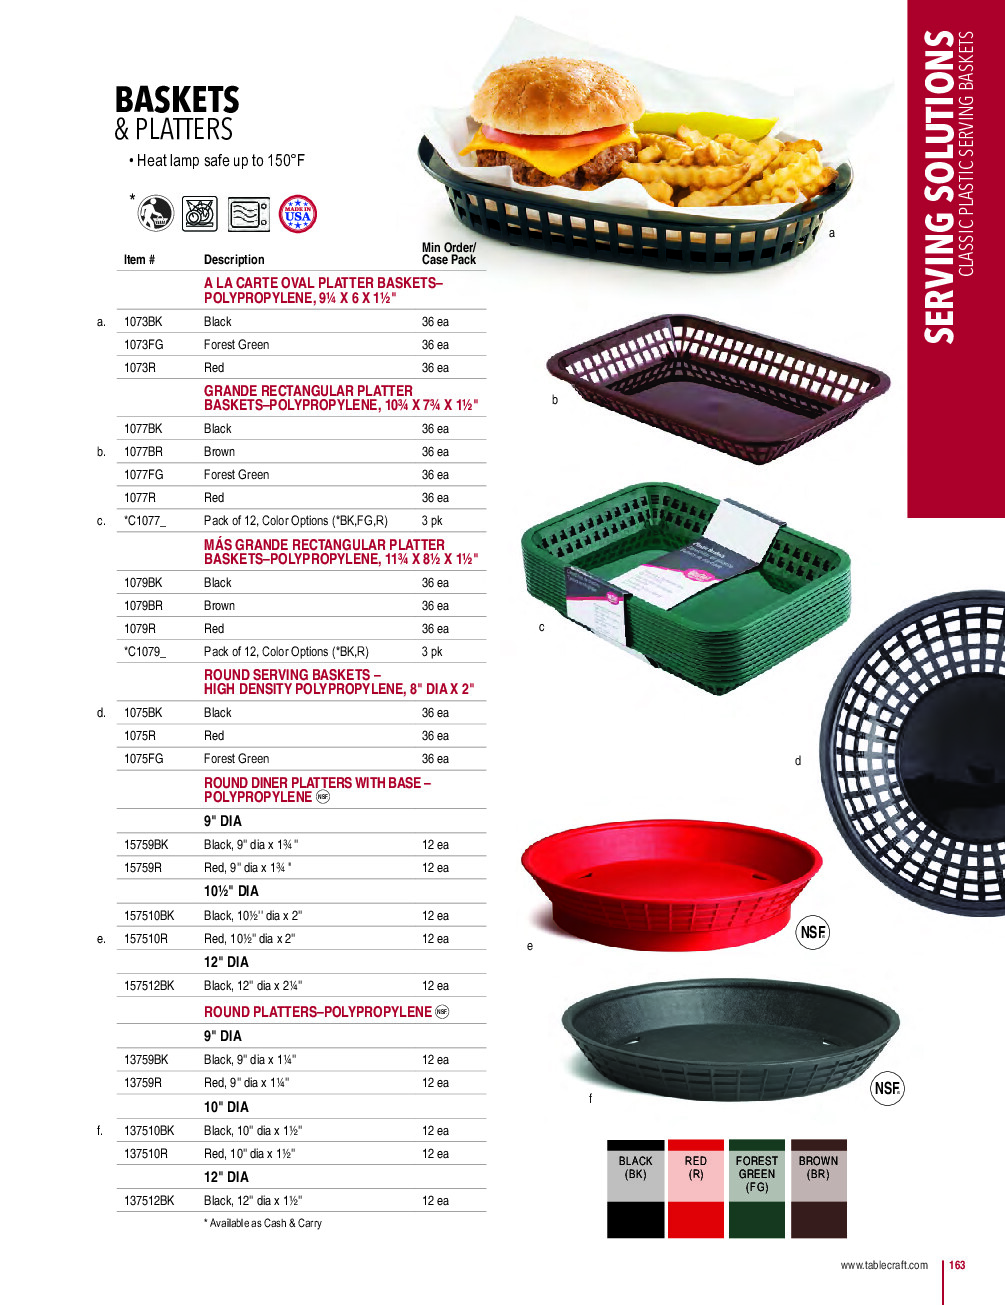 TableCraft Products C1077BK Fast Food Basket